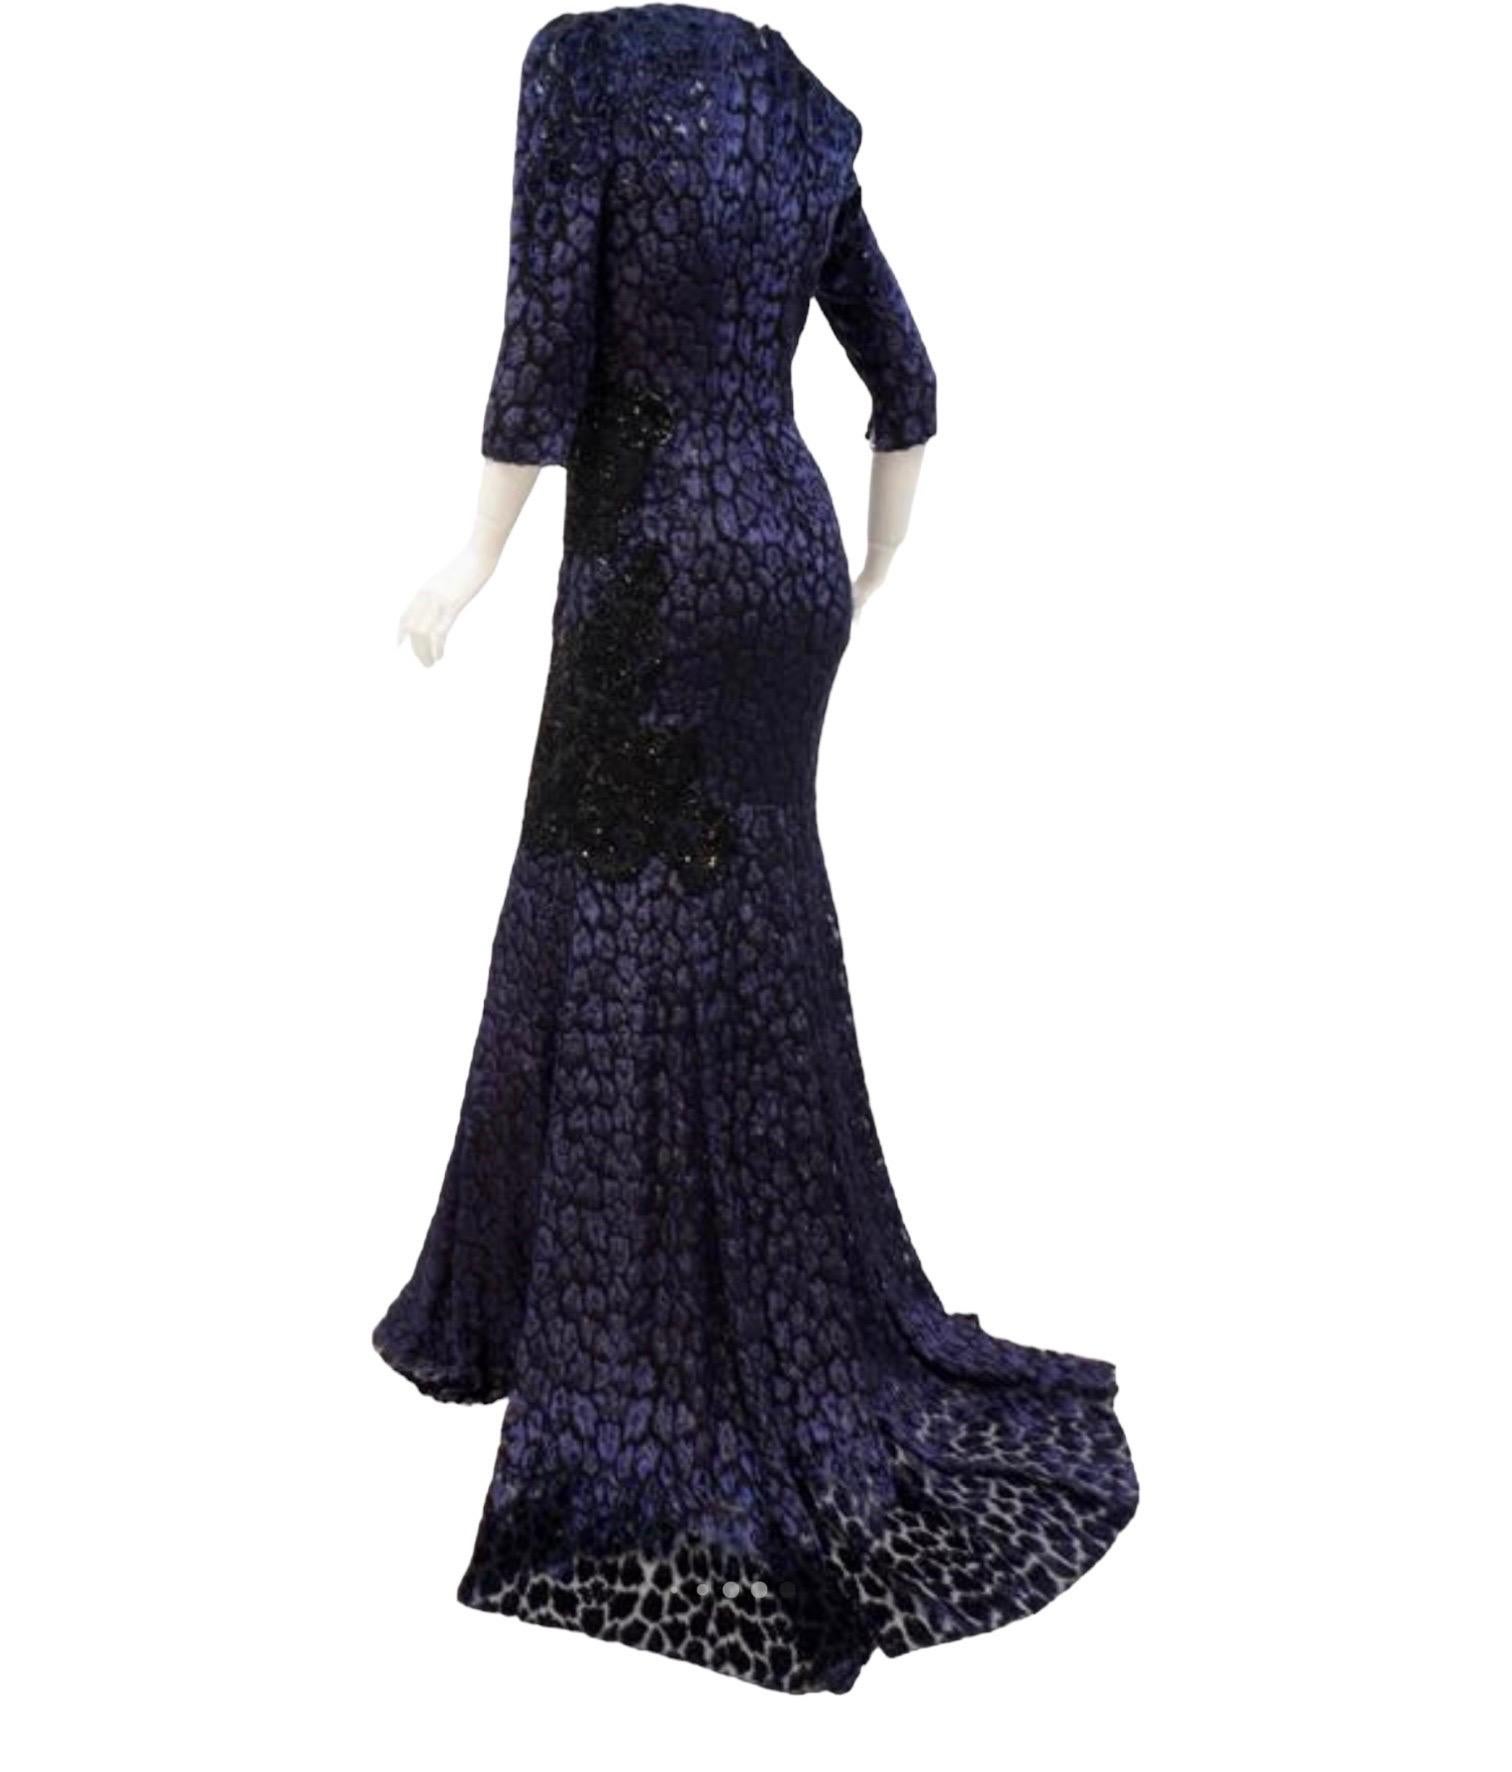 Andrew Gn Embellished Midnight Blue Leopard Print Devore Velvet Dress Gown Fr 38 4